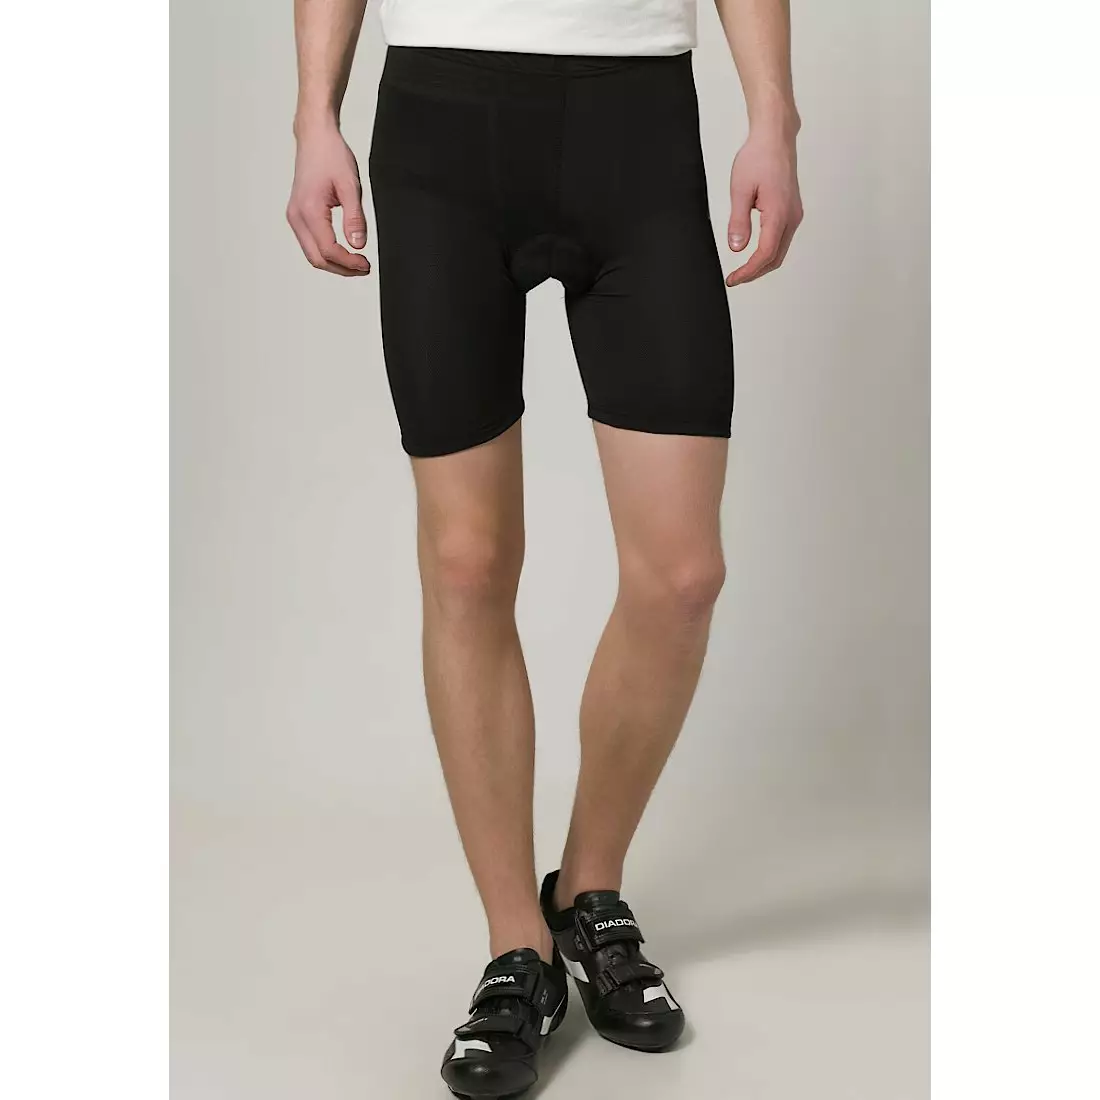 DARE2B MODIFY 2 IN 1 cycling shorts, DMJ085-800